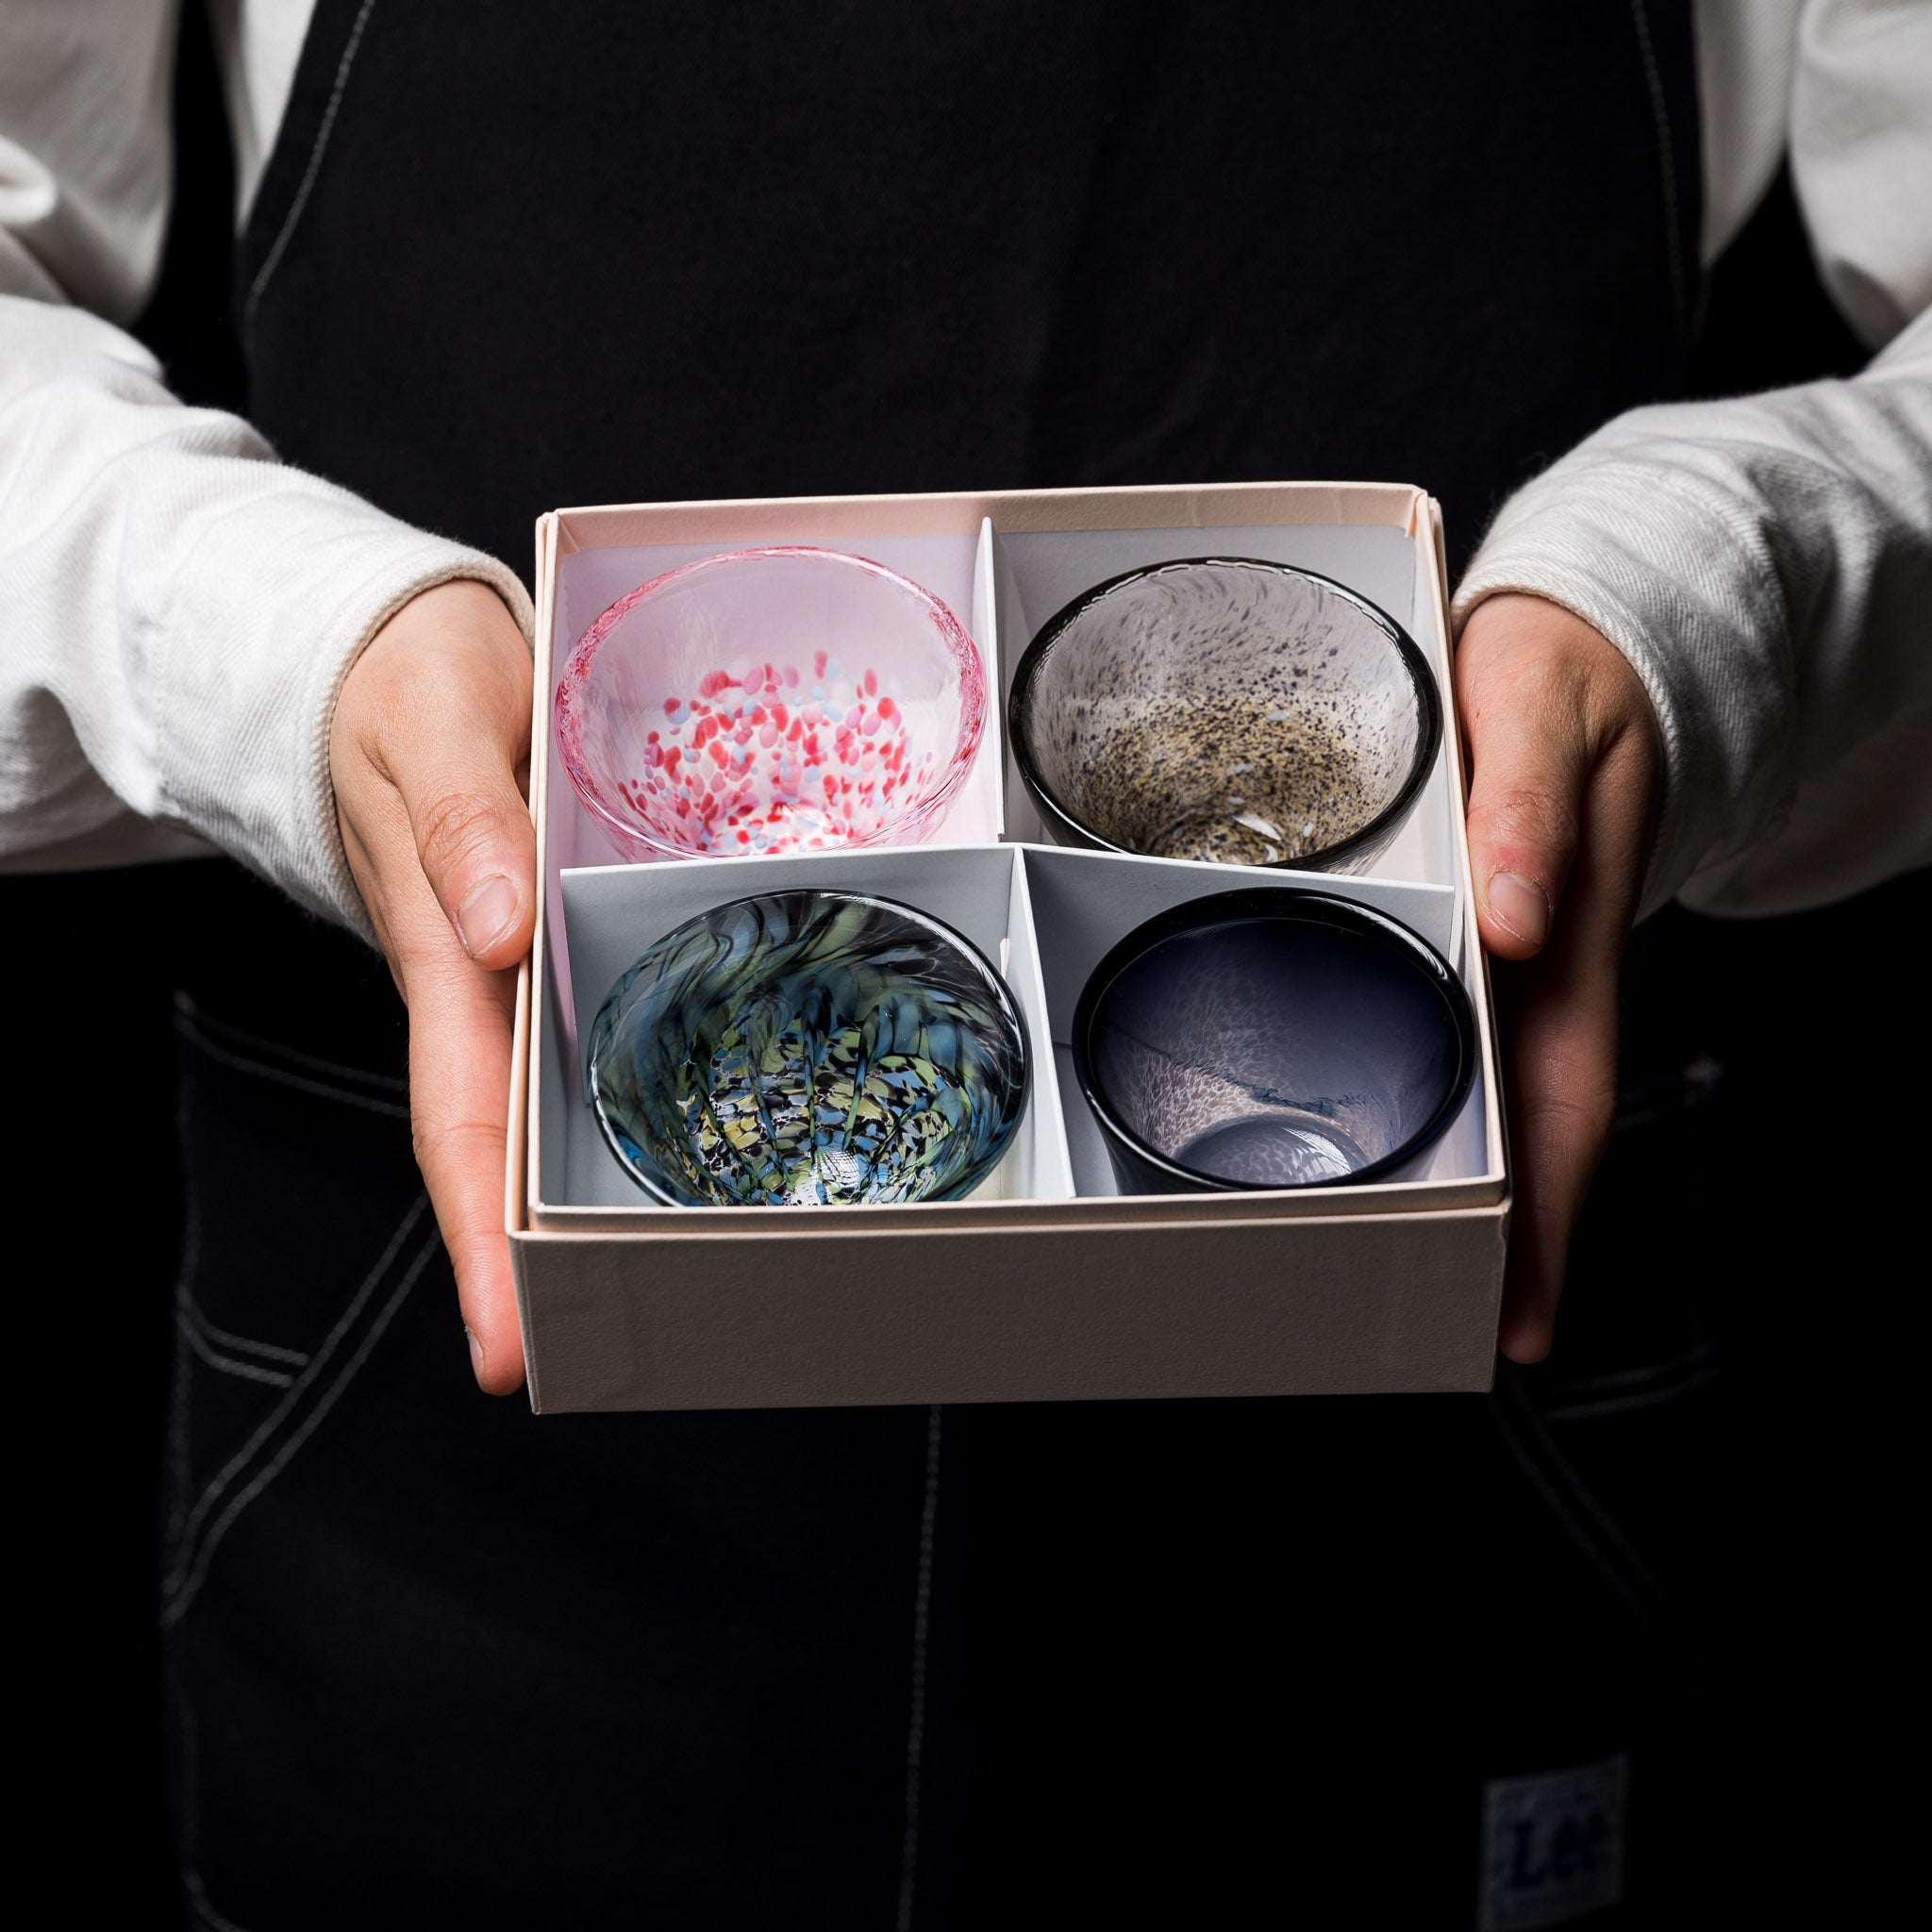 Assort Sake Glass Set of 4 - Fish of Aomori / 津軽びいどろ 酒器セット